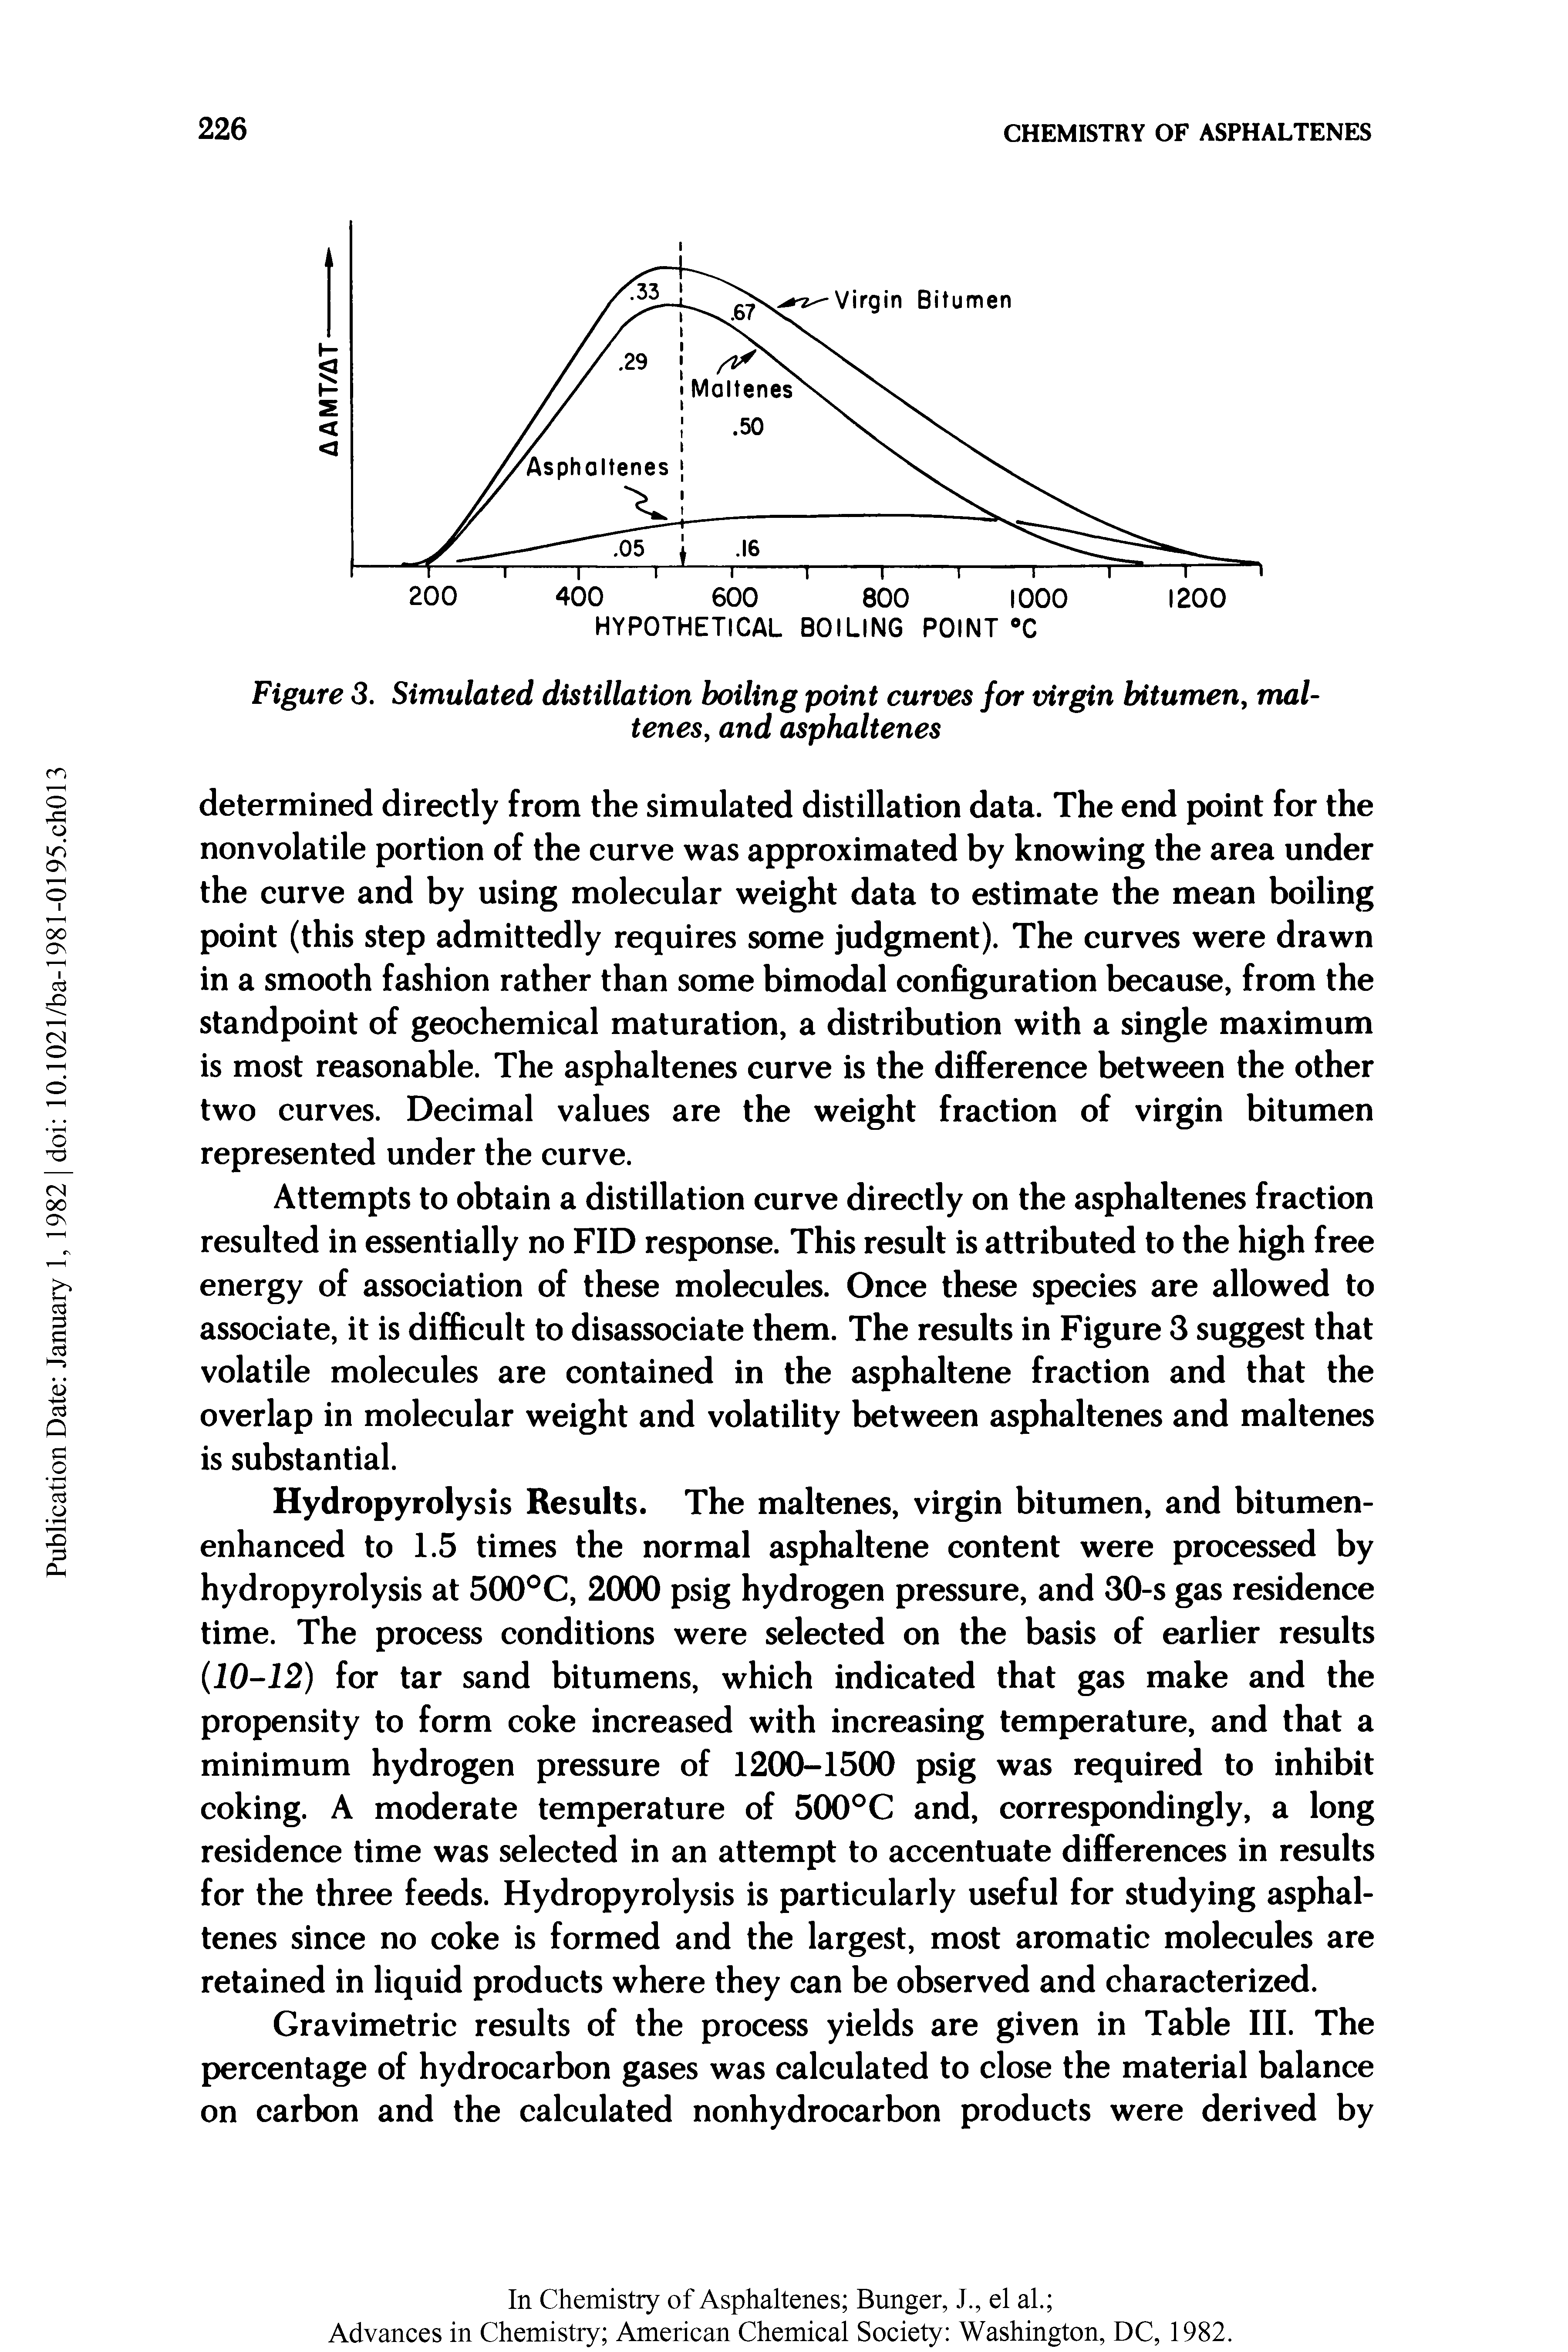 Figure 3. Simulated distillation boiling point curves for virgin bitumen, mal-tenes, and asphaltenes...